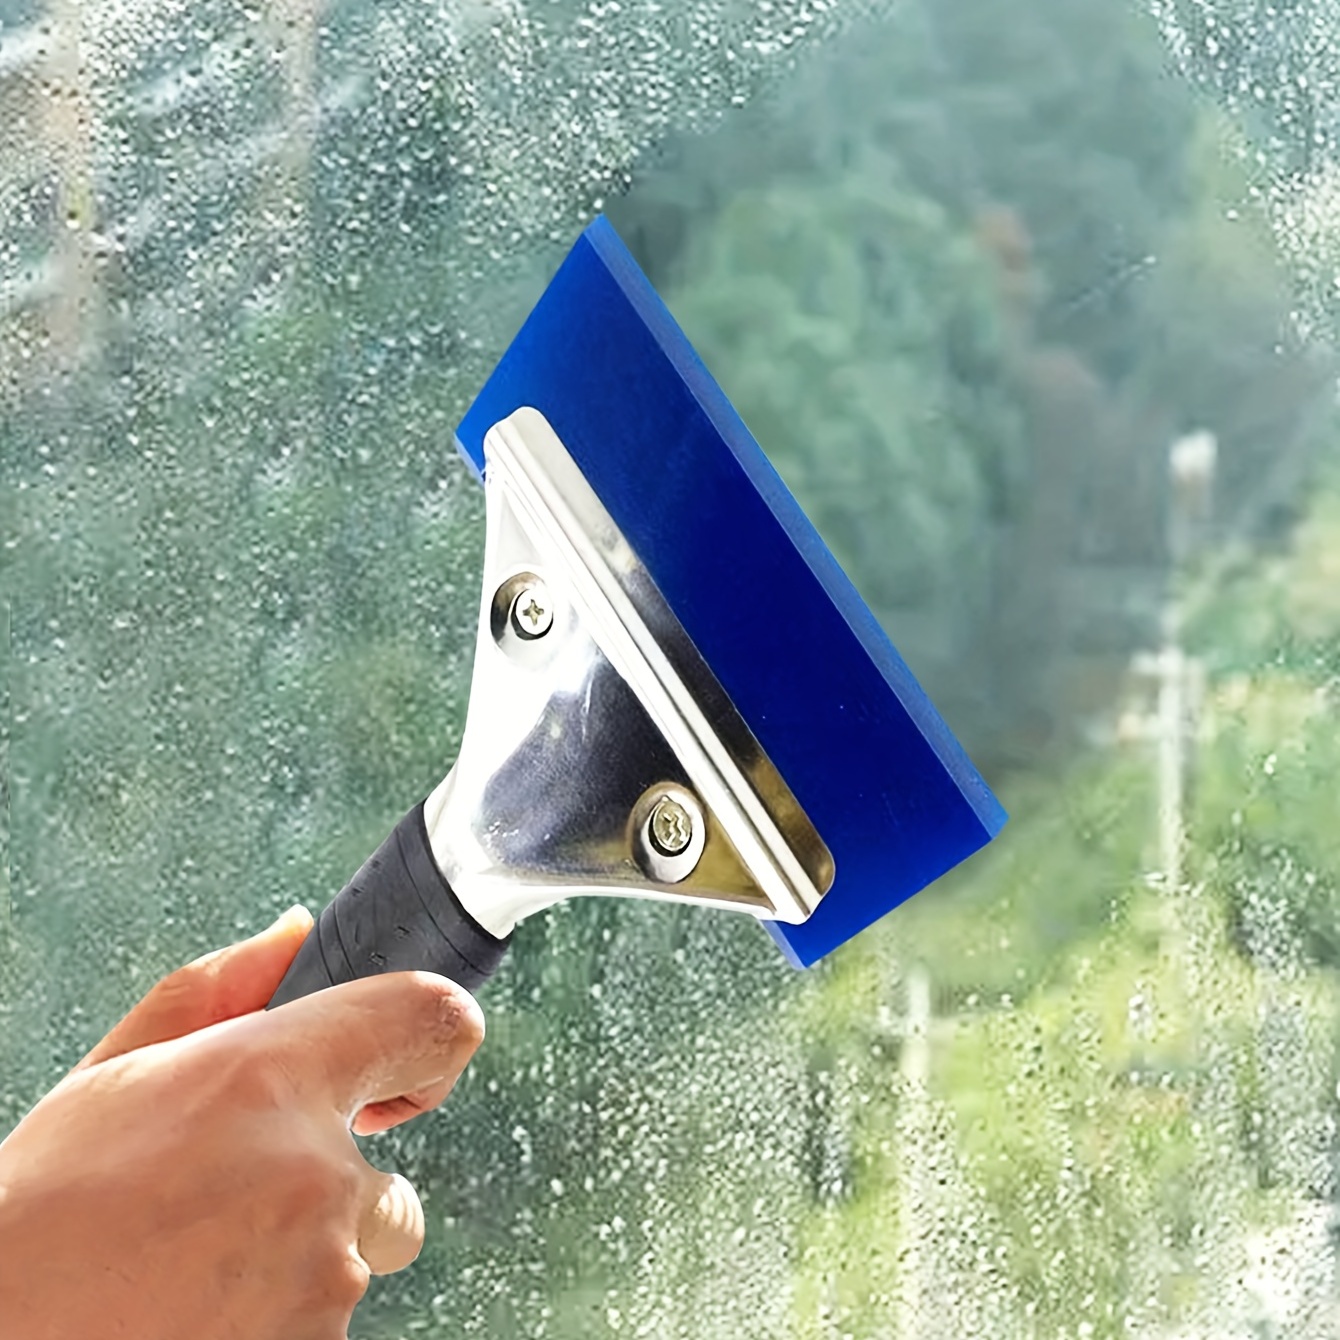 How To Use A Window Scraper & Not Scratch The Glass